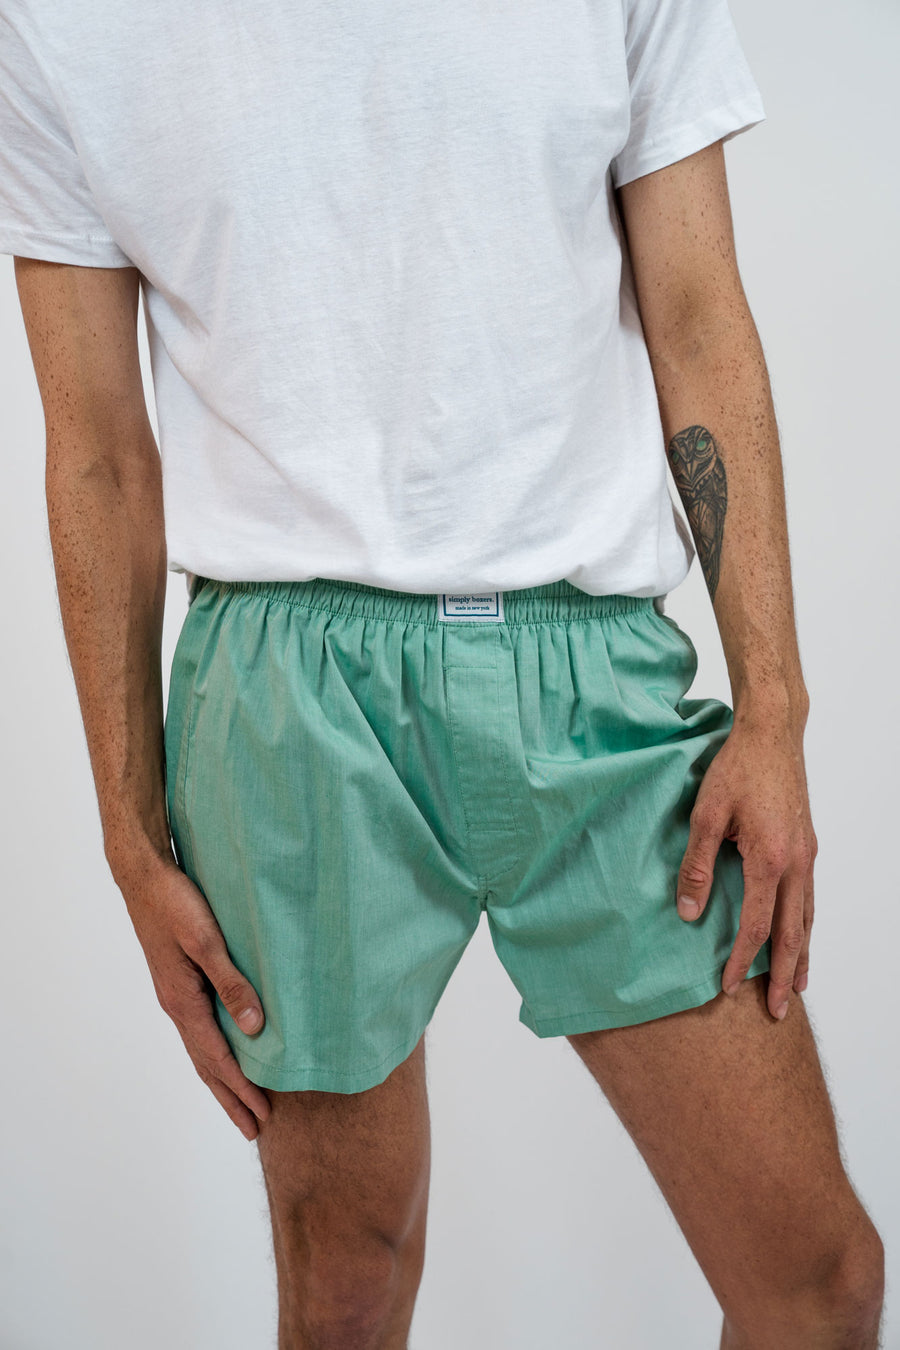 Green boxer shorts